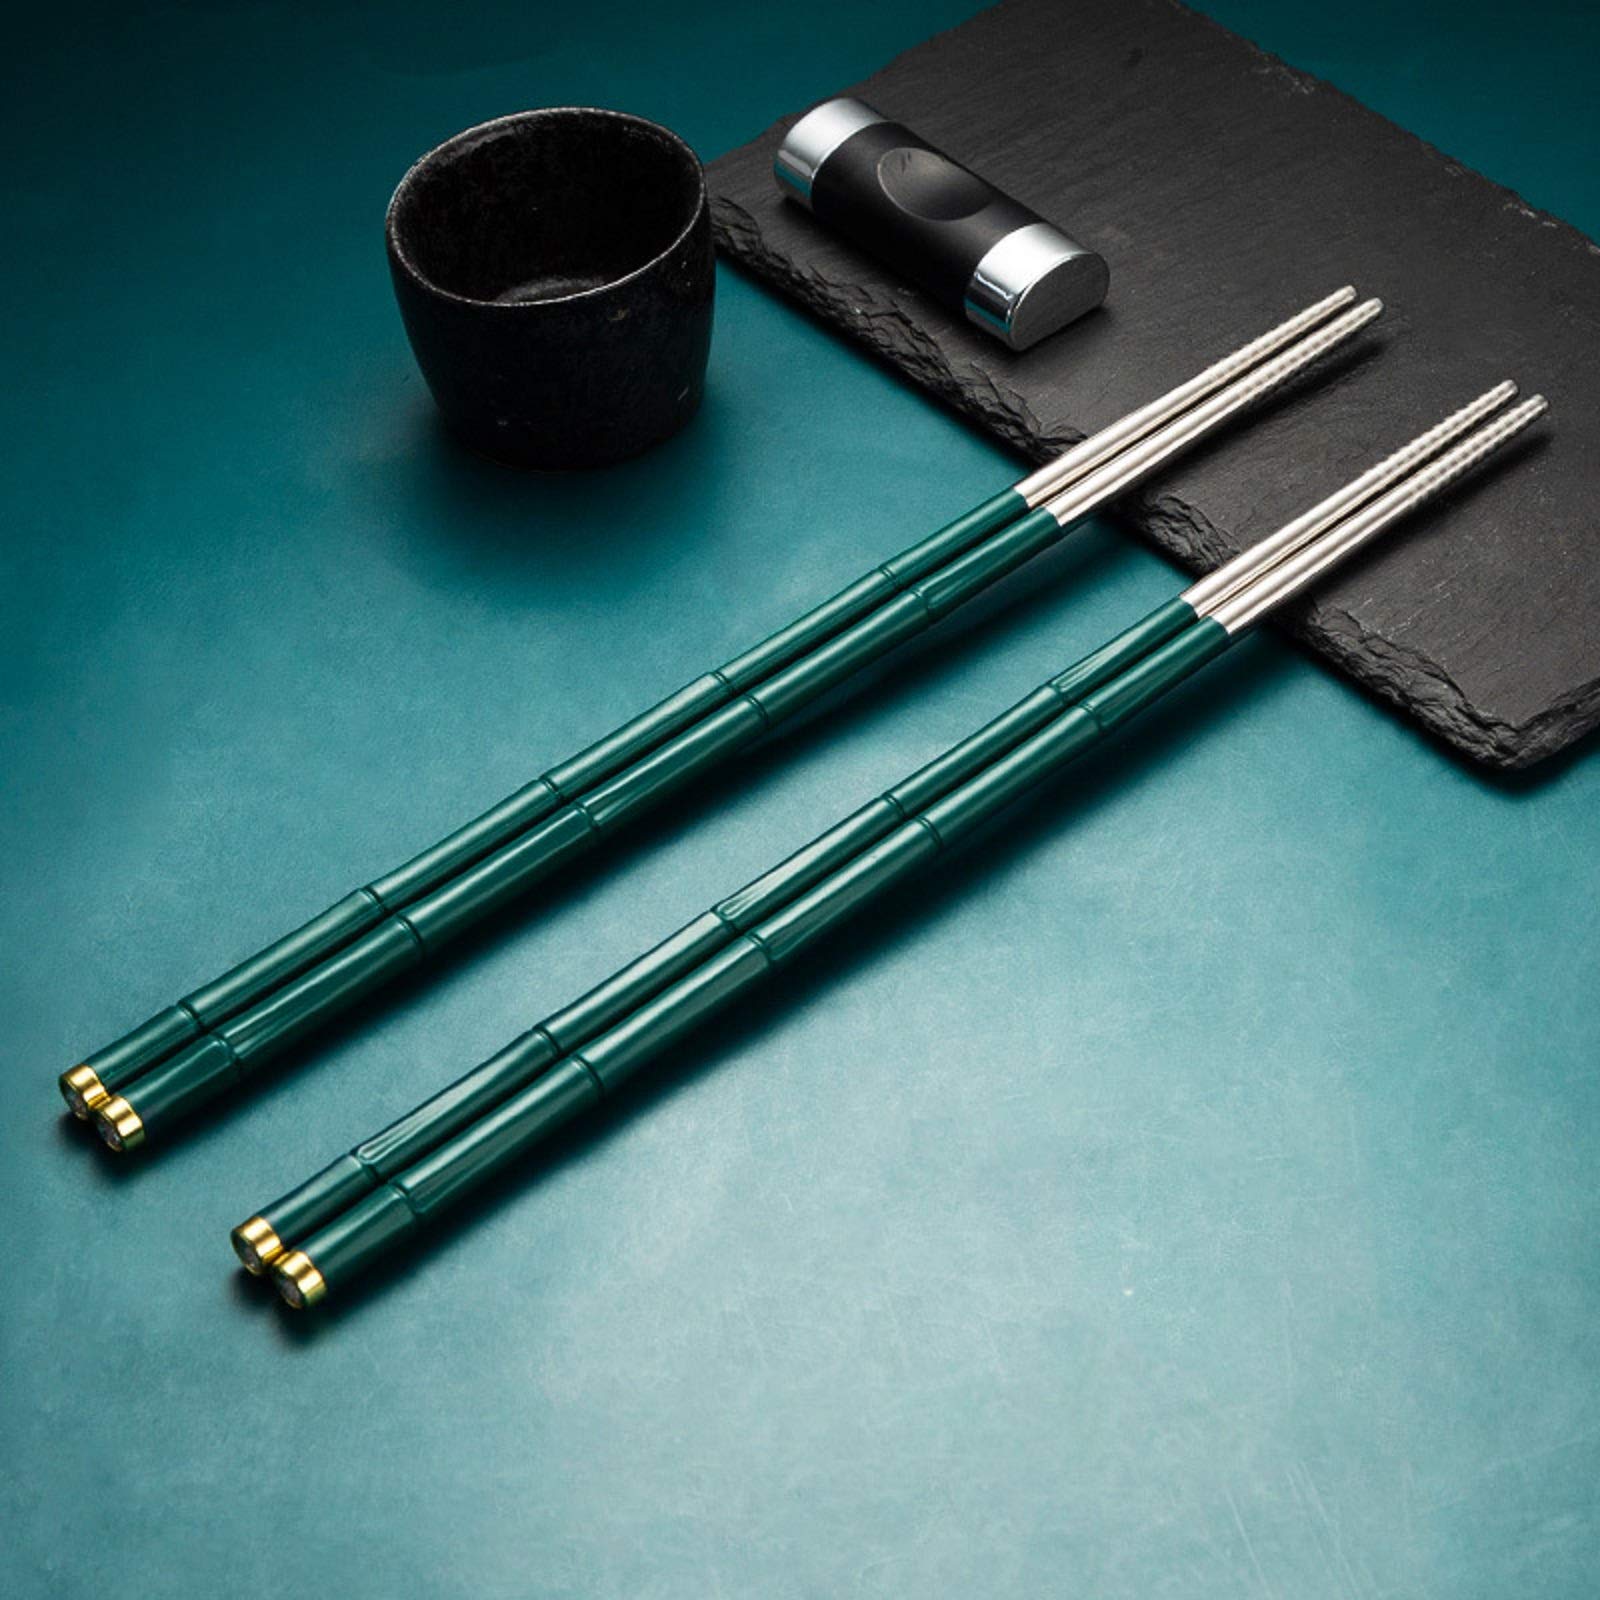 Chanjiso 5 Pairs Reusable Metal Chopsticks Dishwasher Safe,Japanese Korean Creative Chop Sticks Pack Chopstick, Non-Slip, 9.5 h Gift Set